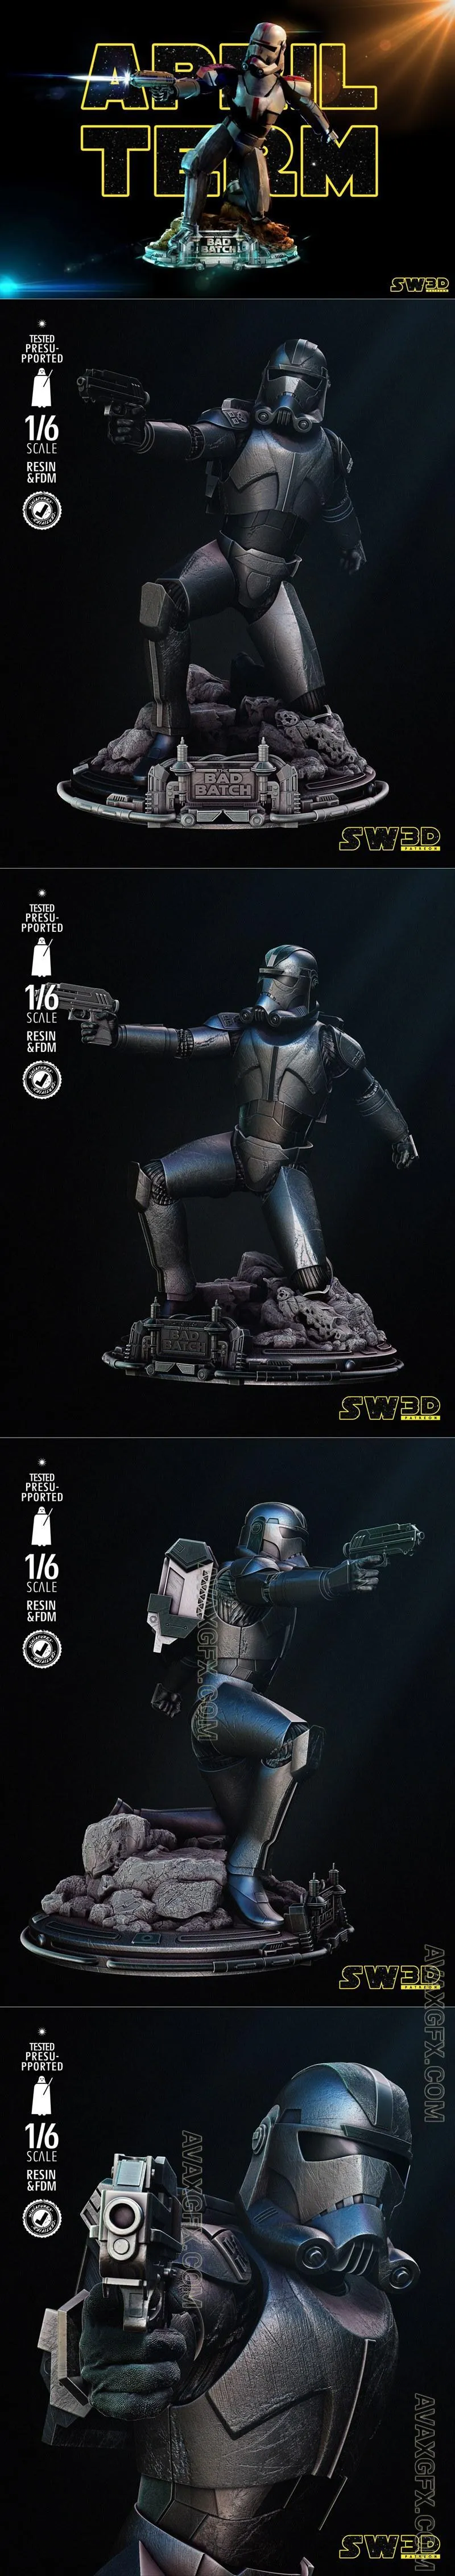 Star Wars - Hunter Sculpture - STL 3D Model